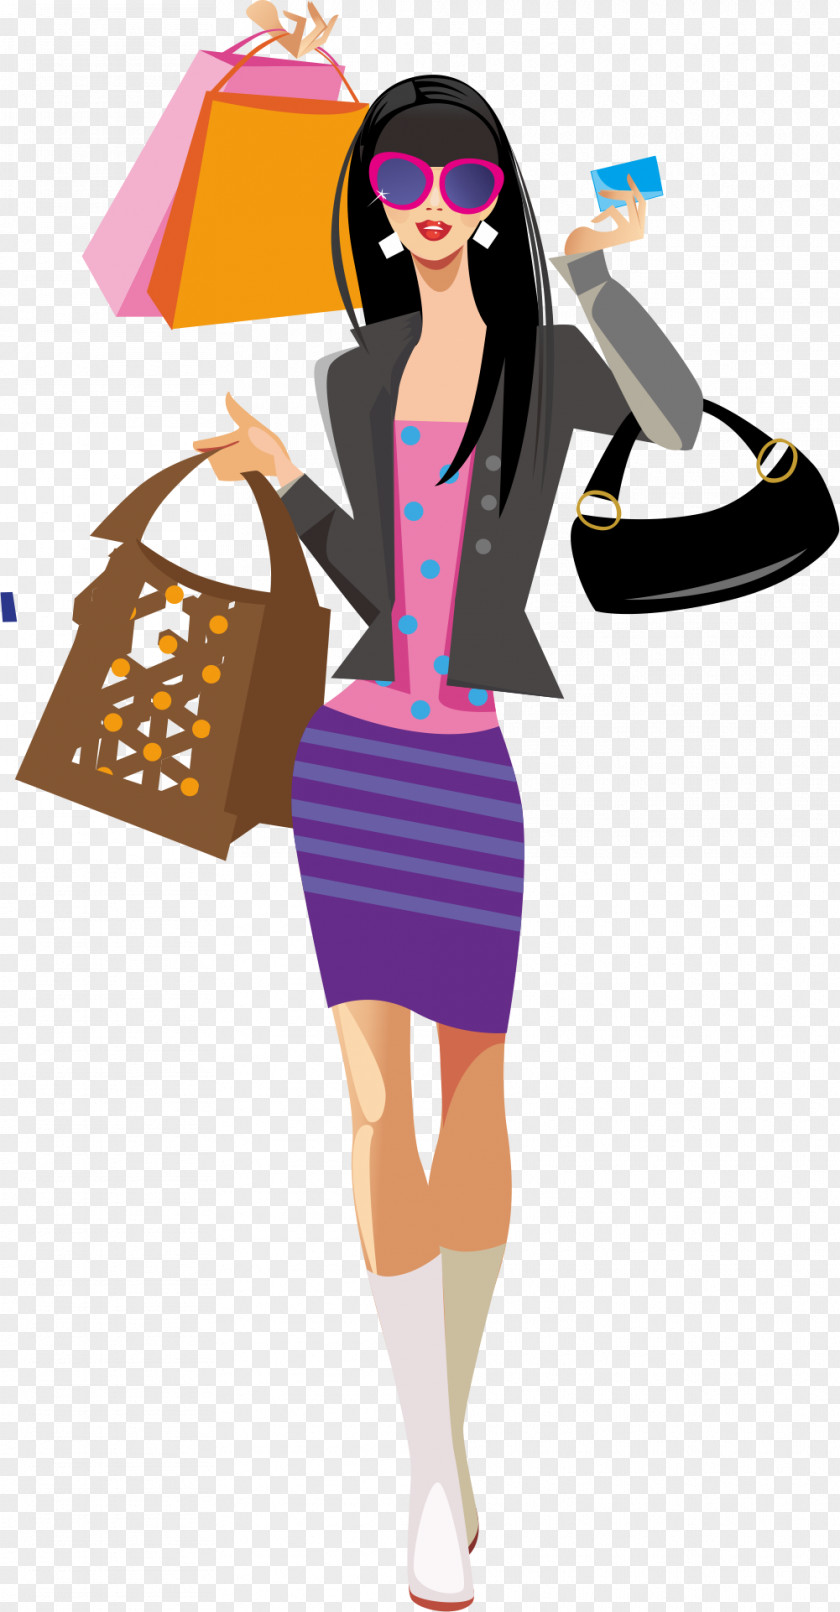 Shopping Fashion PNG , Cartoon girl, woman carrying bag illustration clipart PNG